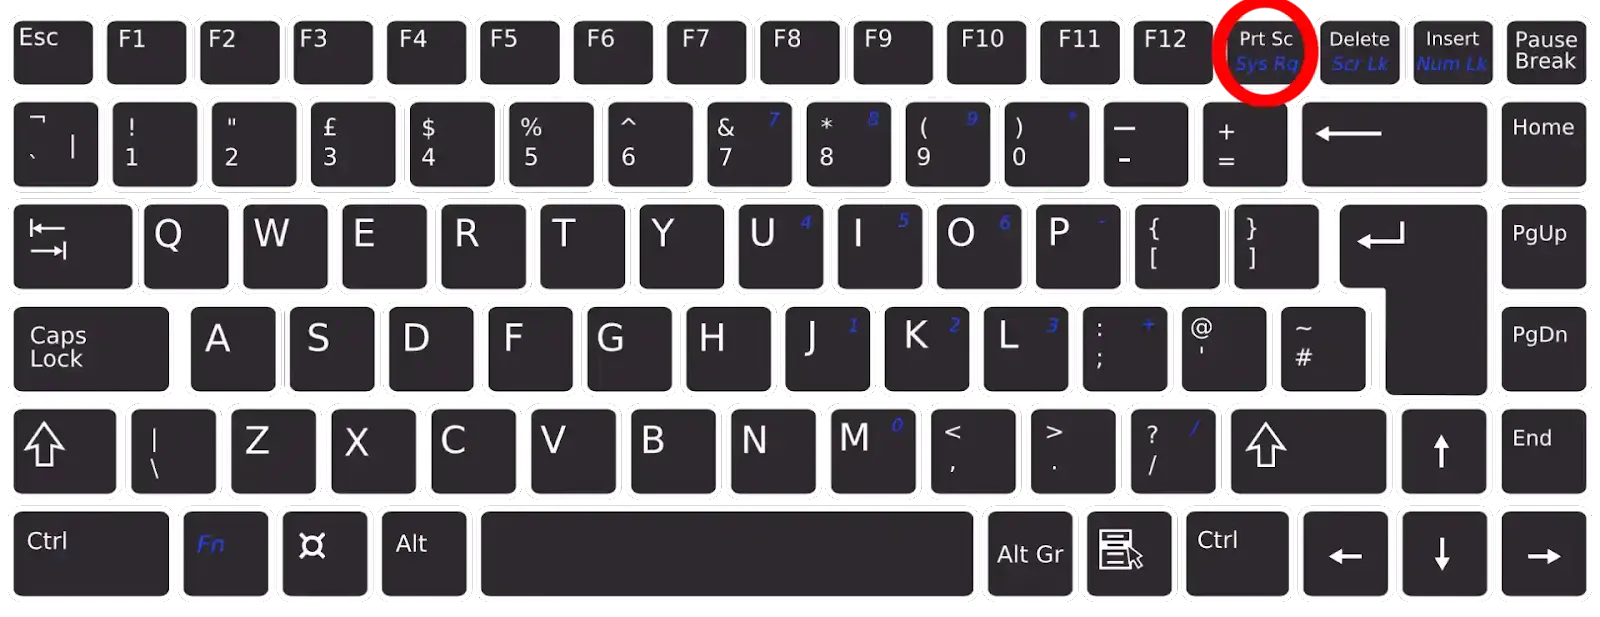 Illustration of the print screen key on windows keyboard